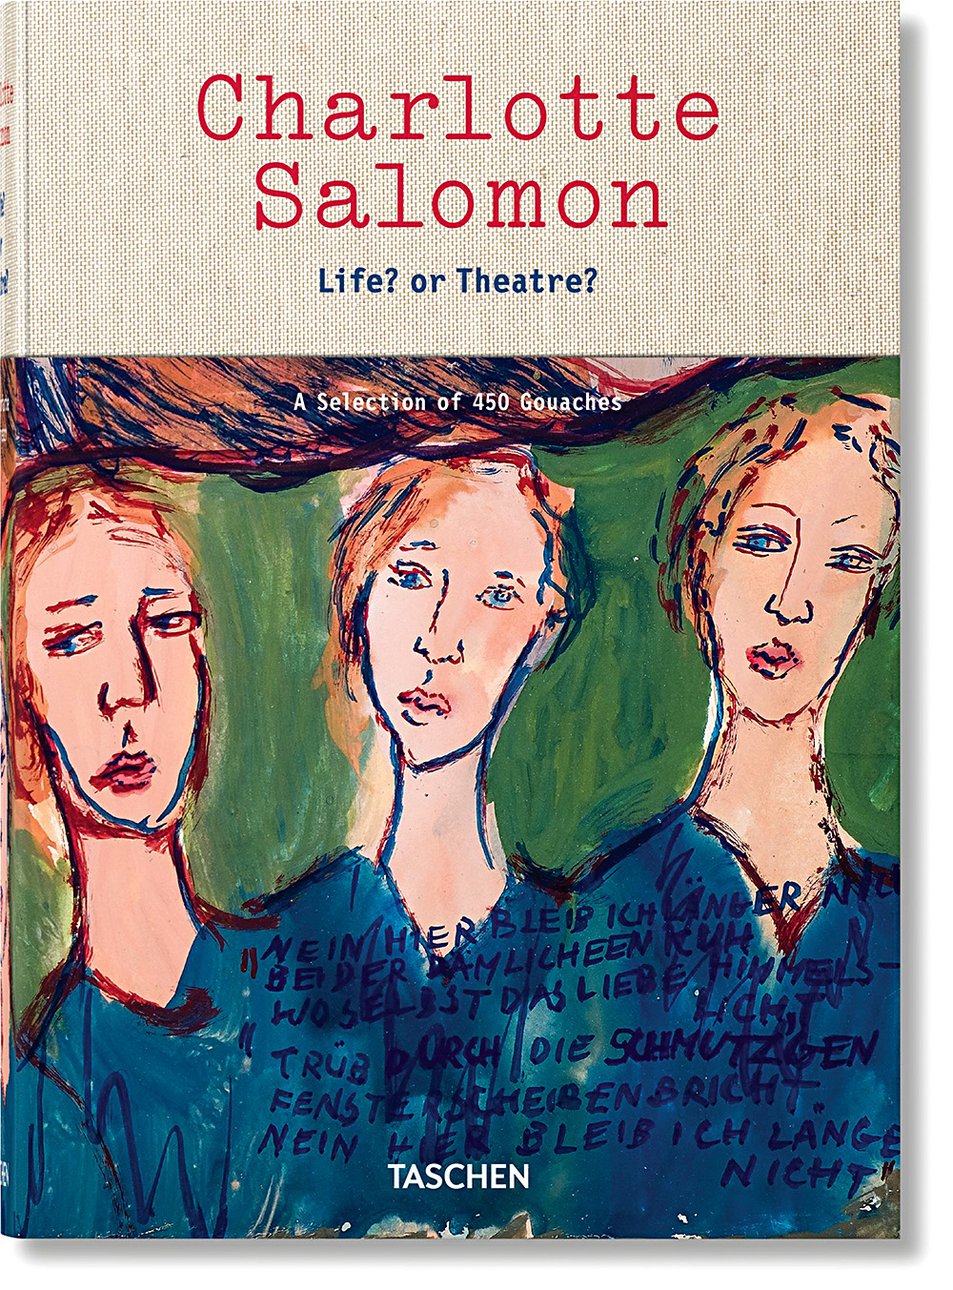 Charlotte Salomon. Life? or Theatre?: A Selection of 450 Gouaches / Judit C. E. Belinfante, Evelyn Benesch, eds. Koln: Taschen, 2017. На английском языке